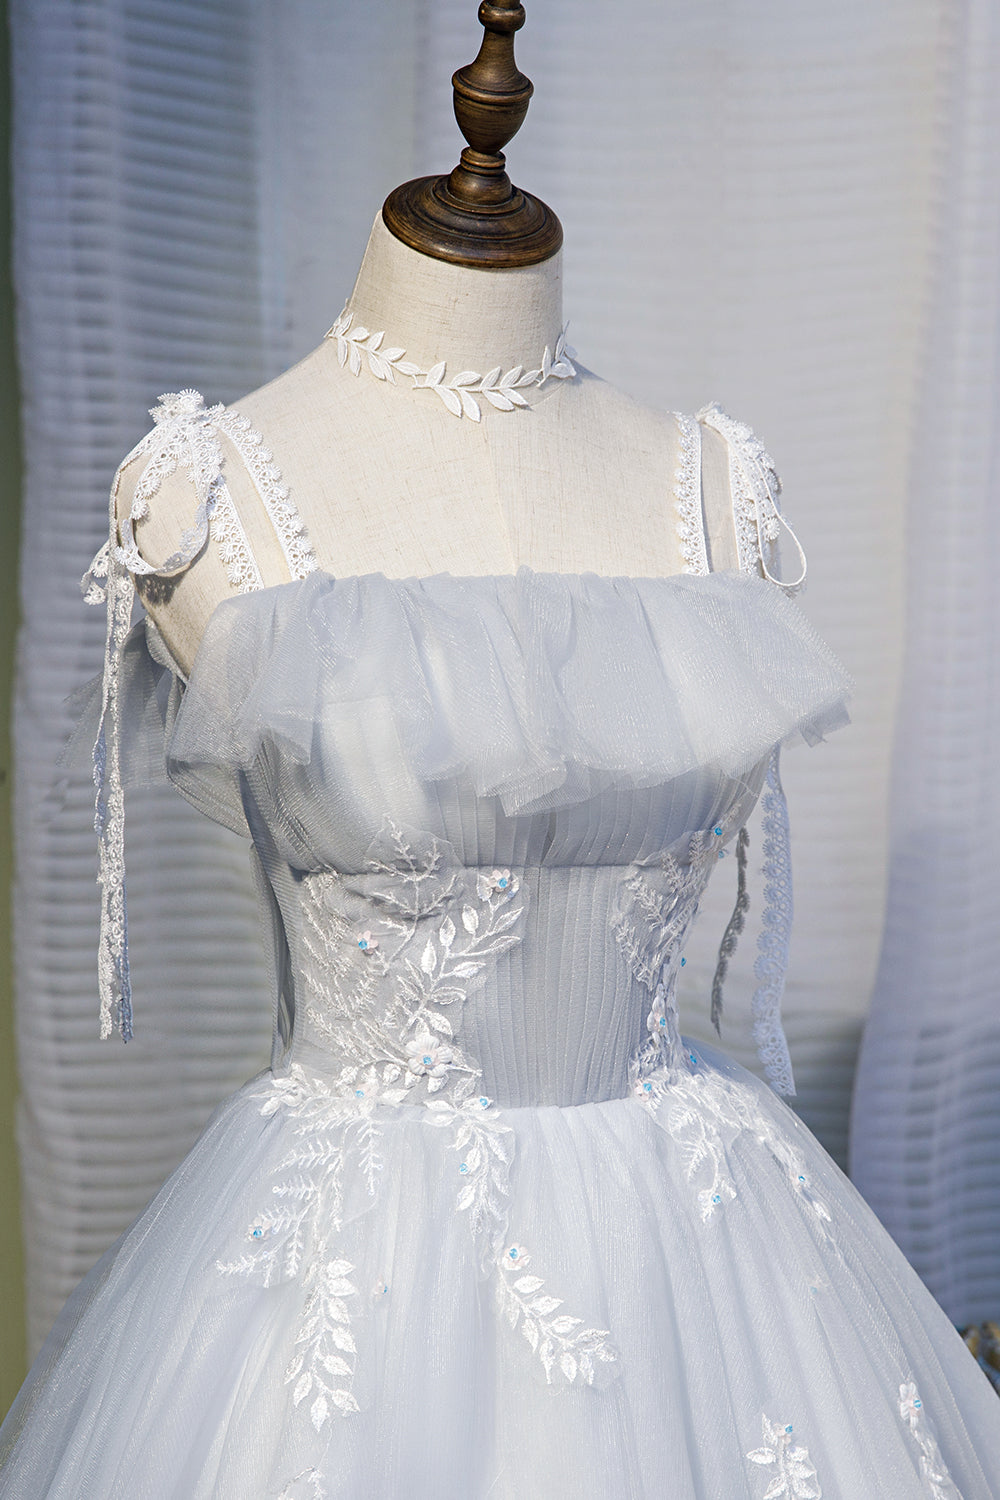 Tulle A-Line Short Prom Dress Summer Dress Sleeveless Homecoming Dress